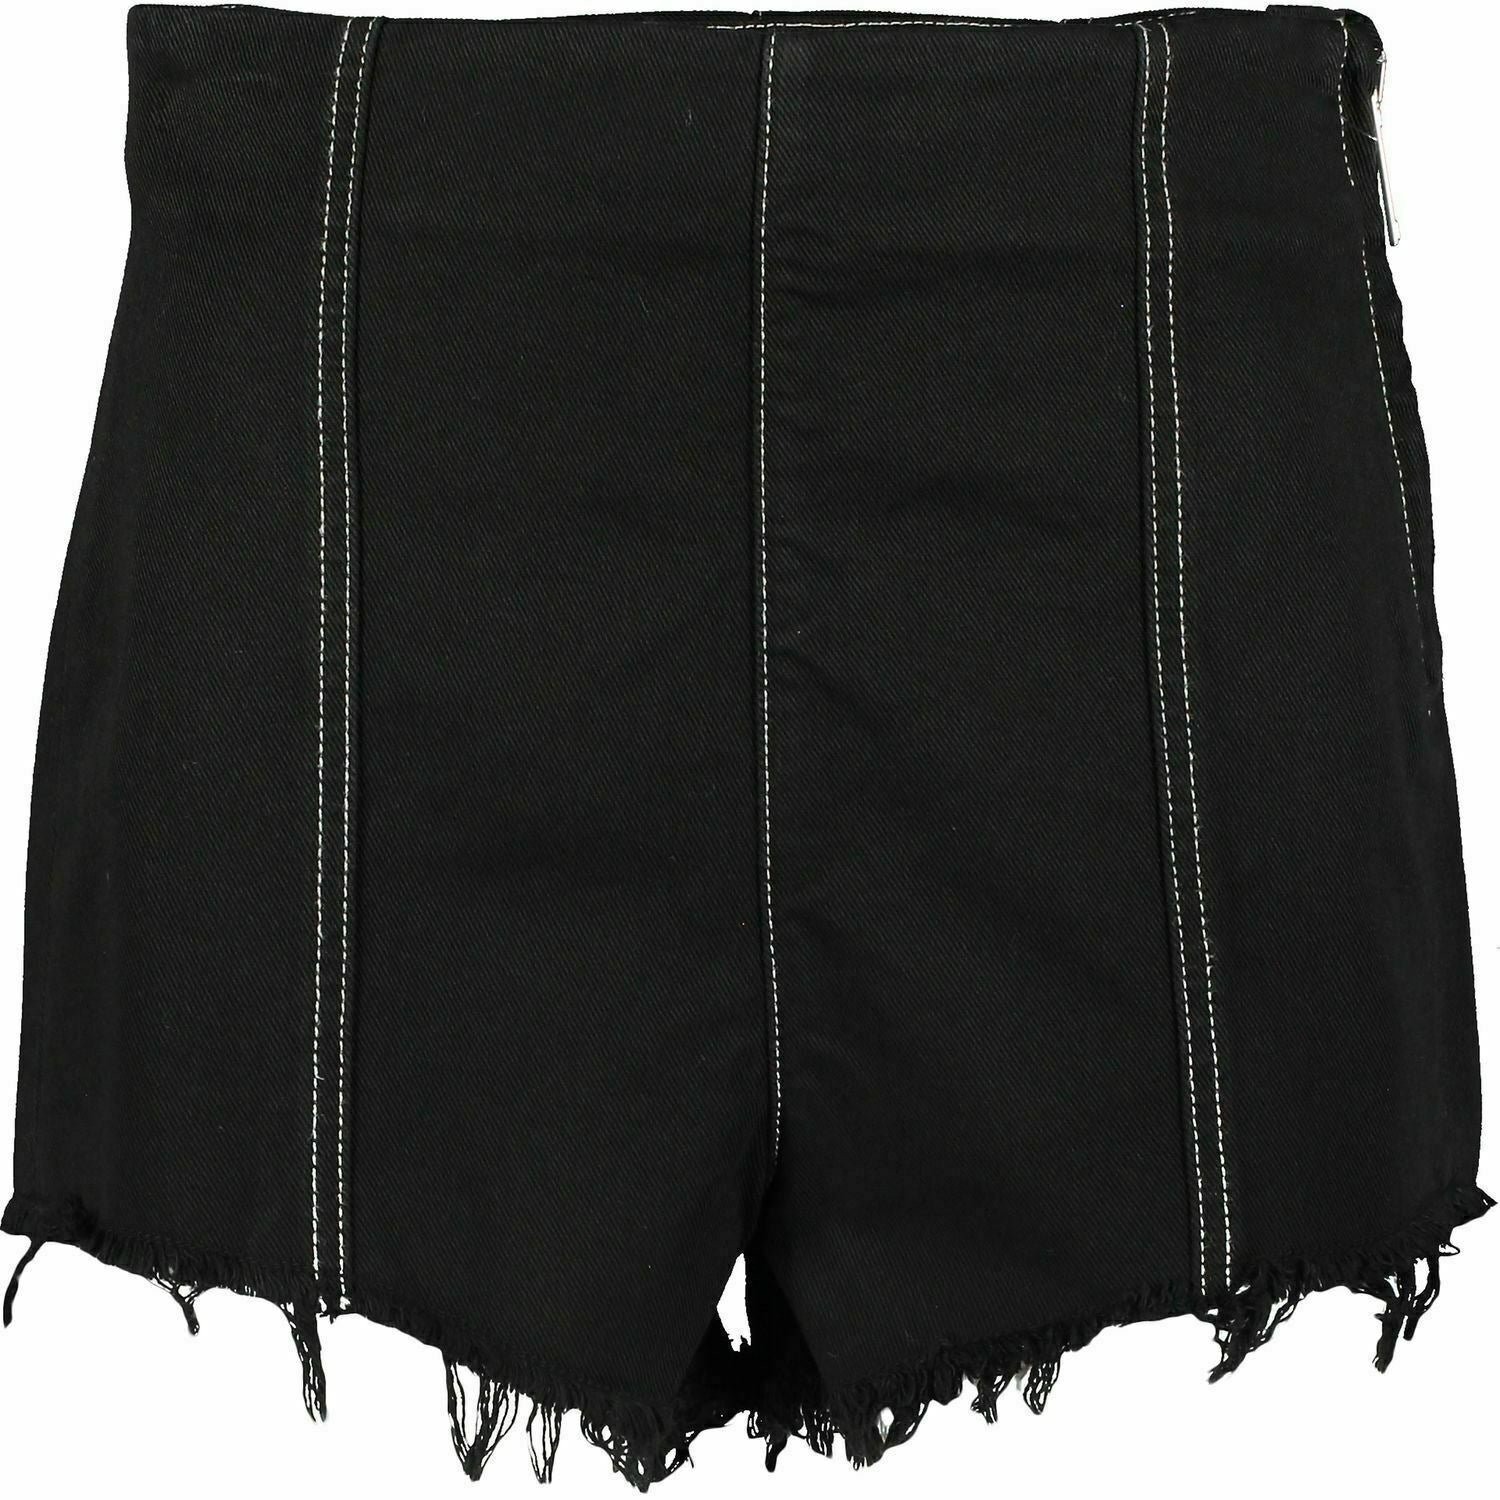 MSGM Women's High Waisted Denim Shorts, Black, size UK 6 / IT 38